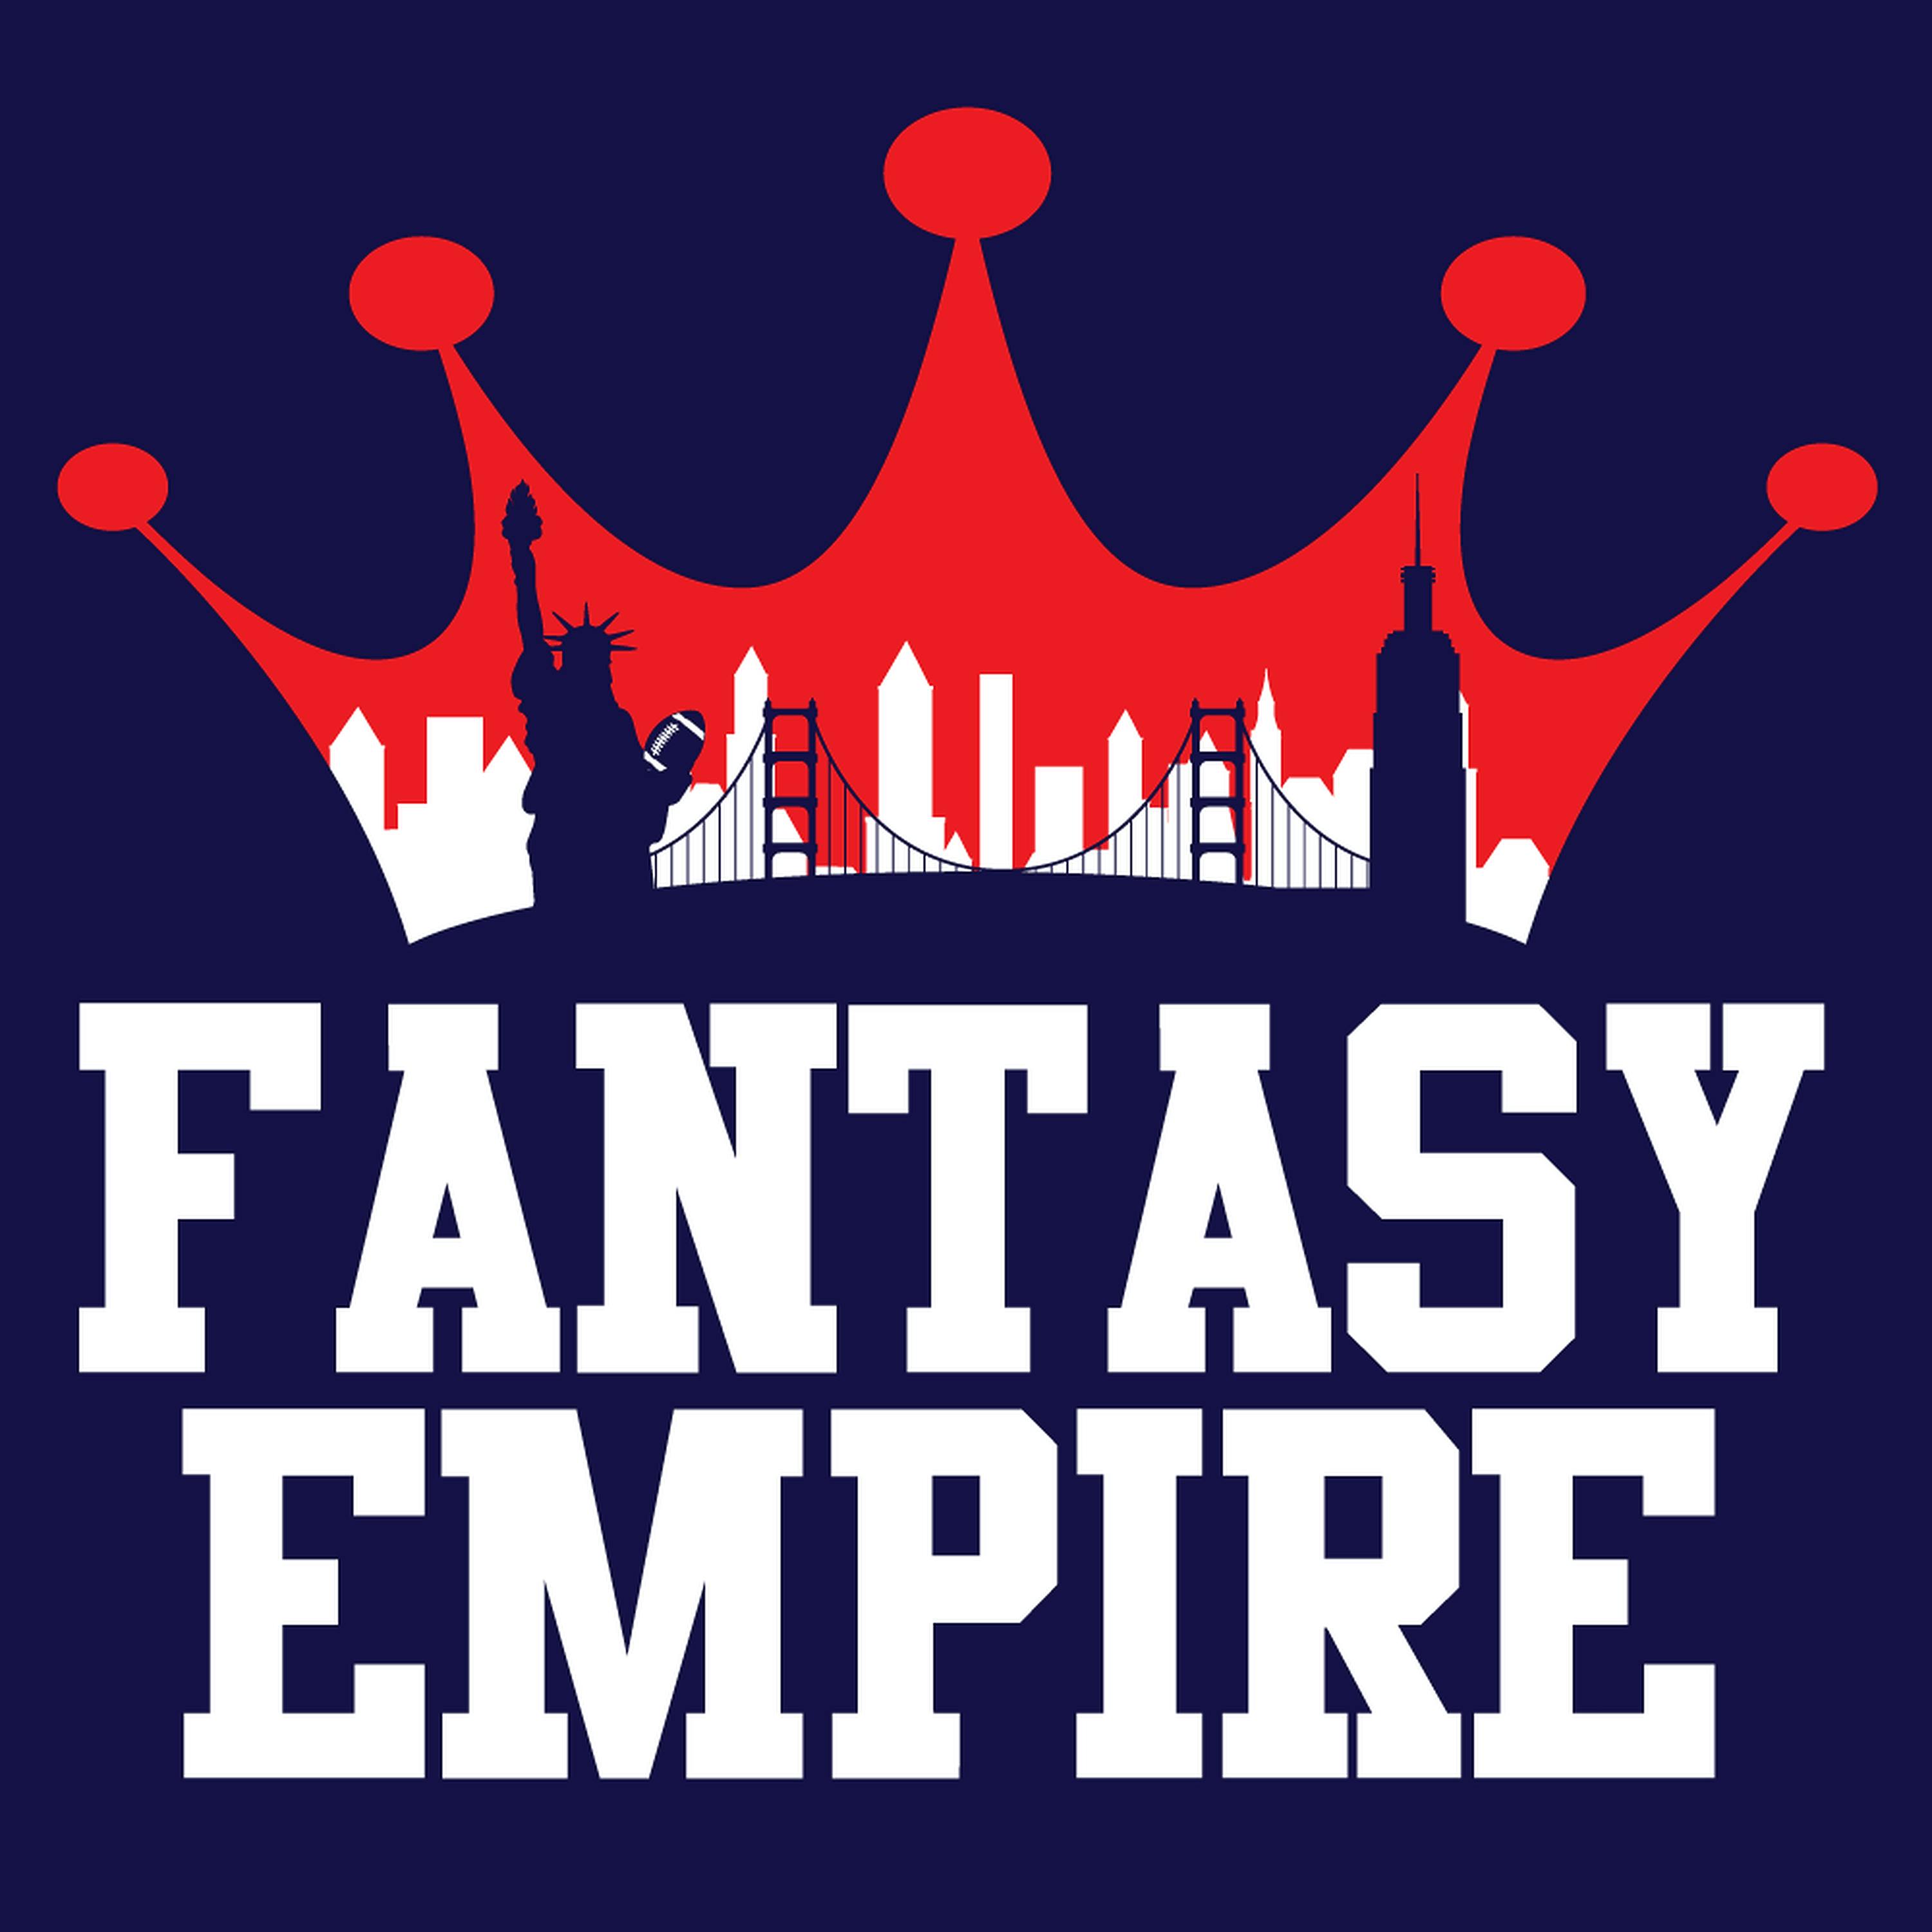 Fantasy Empire - Keaton Mitchell Fast n Furious